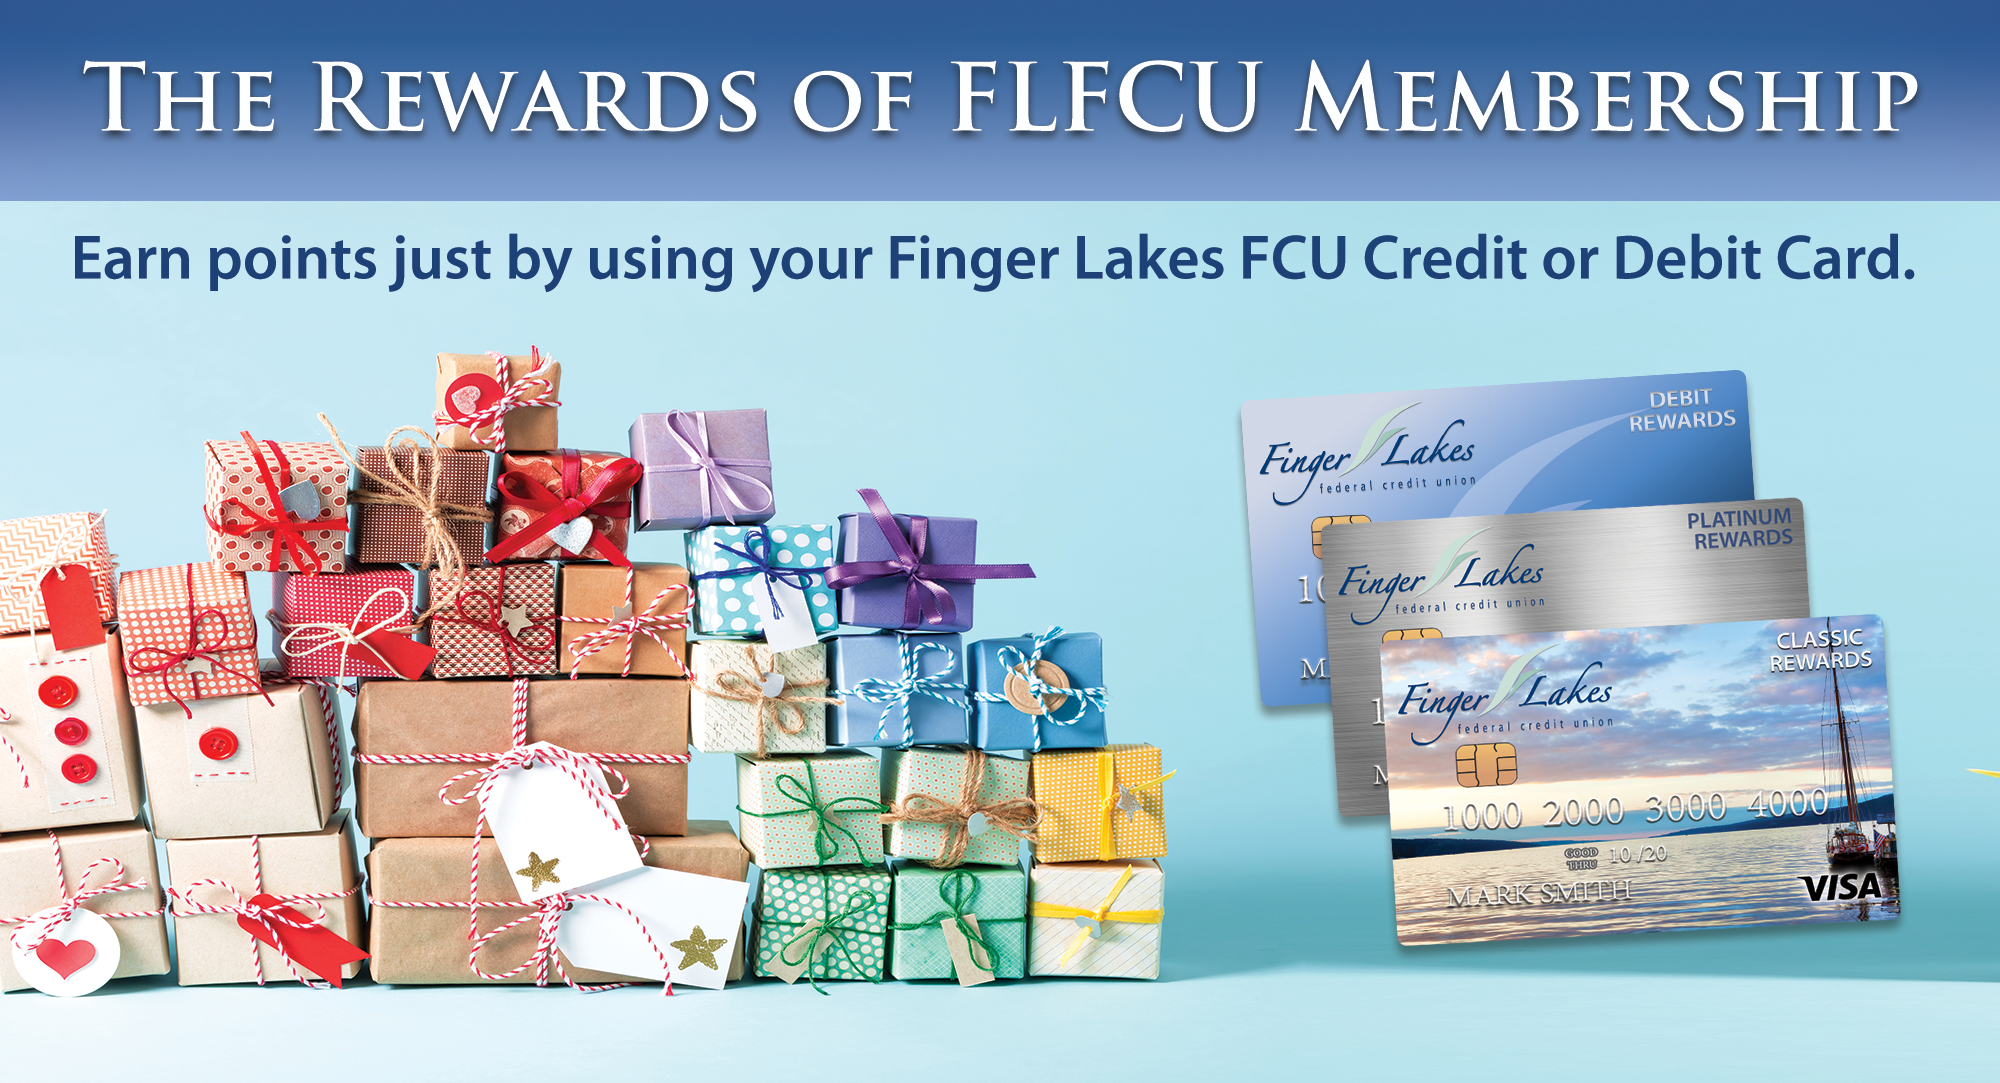 The reward of FLFCU membership. Earn points just by using your FLFCU or debit card.